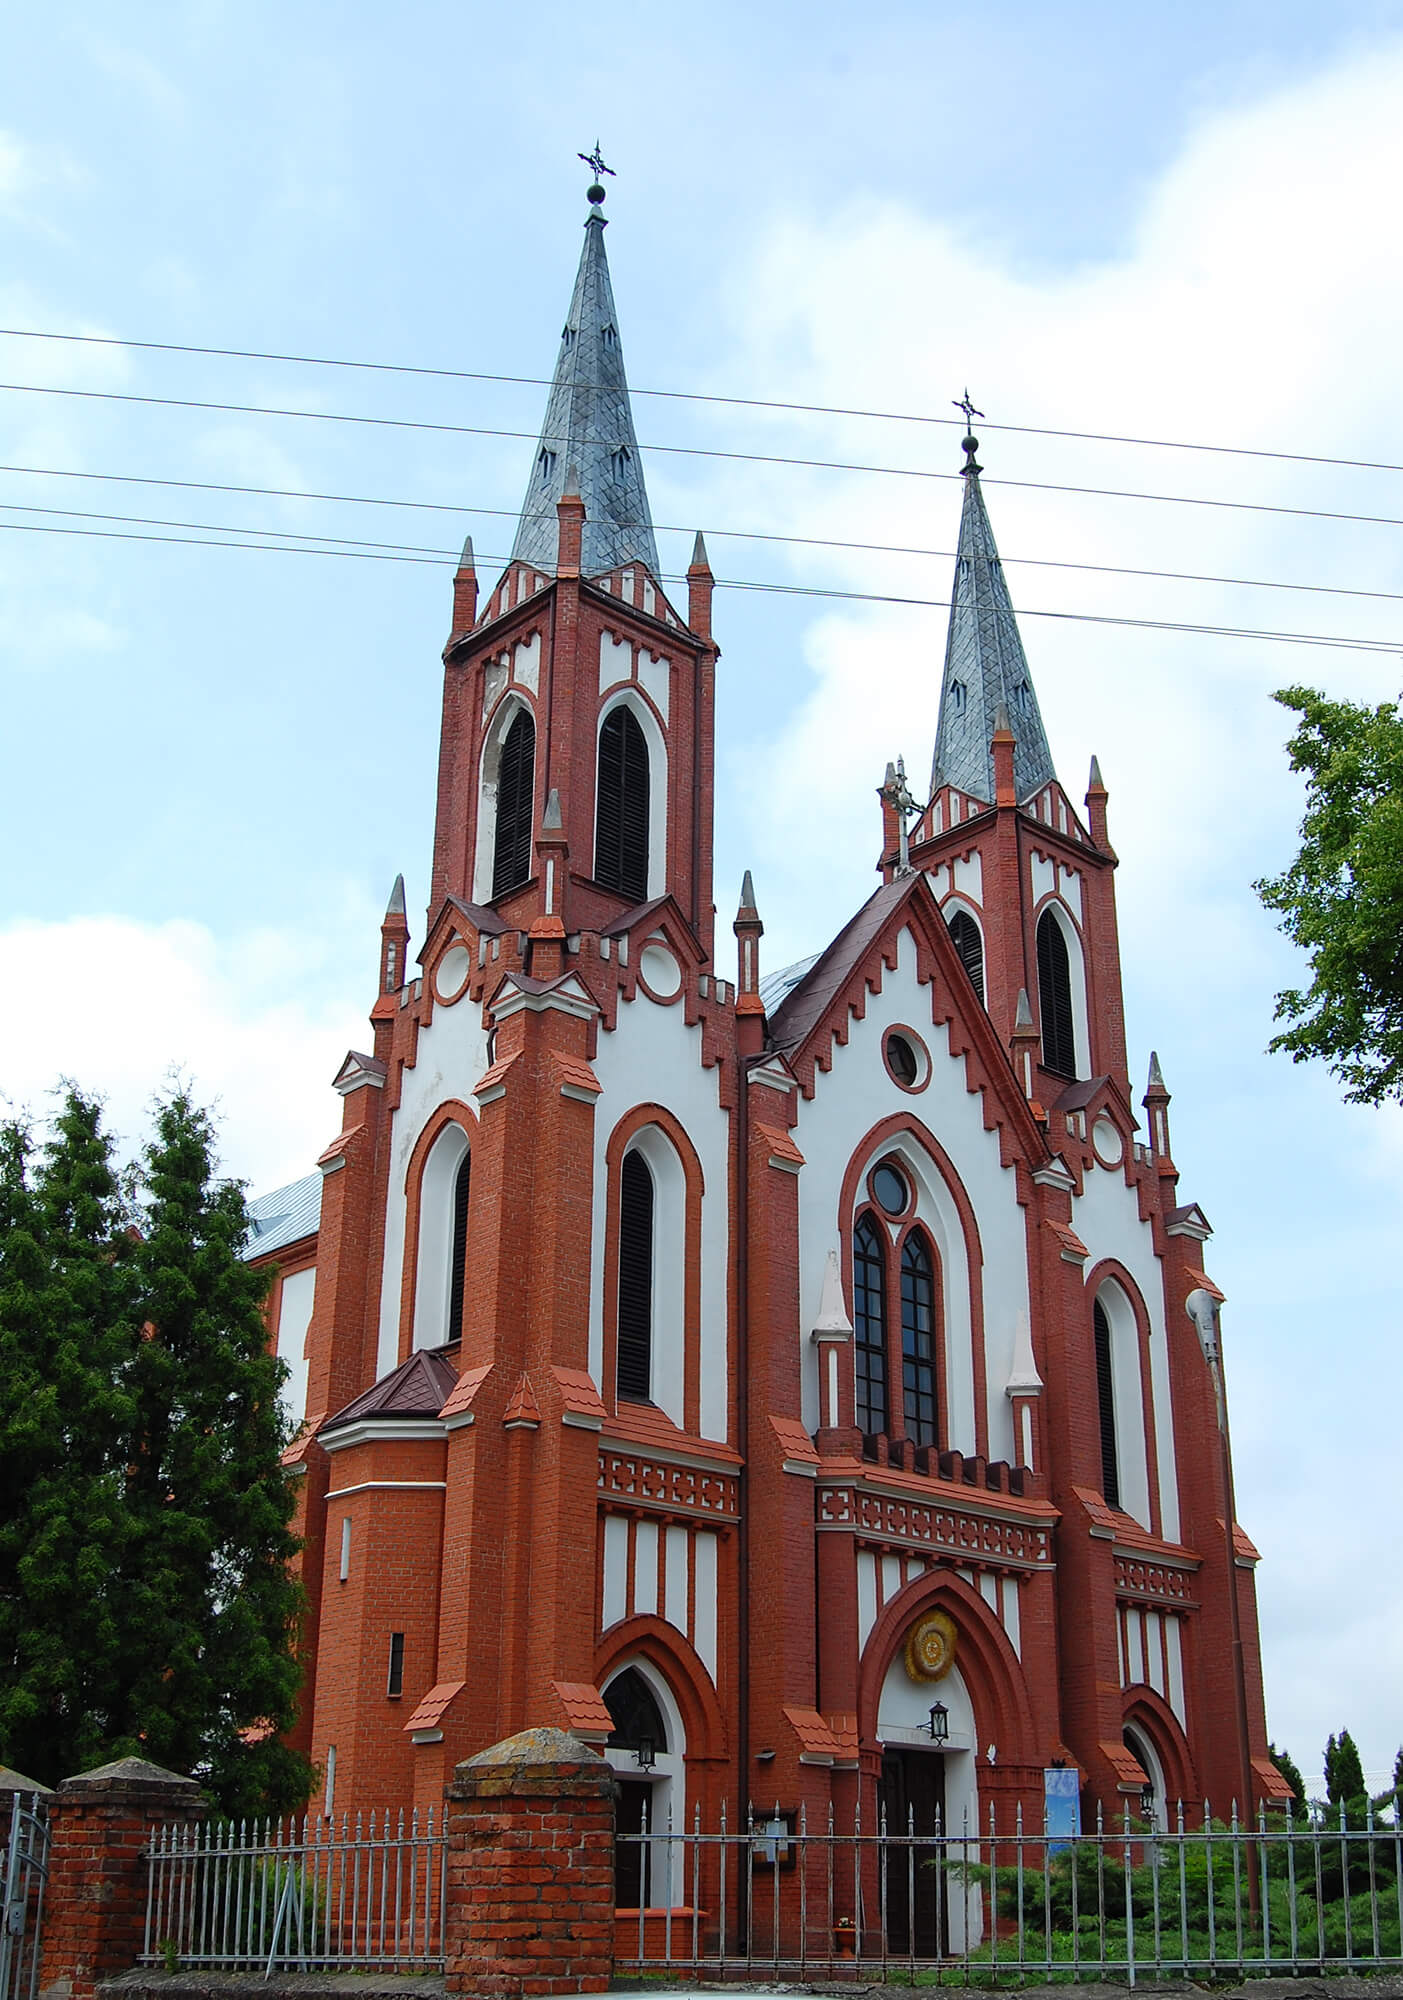 St. Margaret Virgin and Martyr Parish Church in Wrociszew